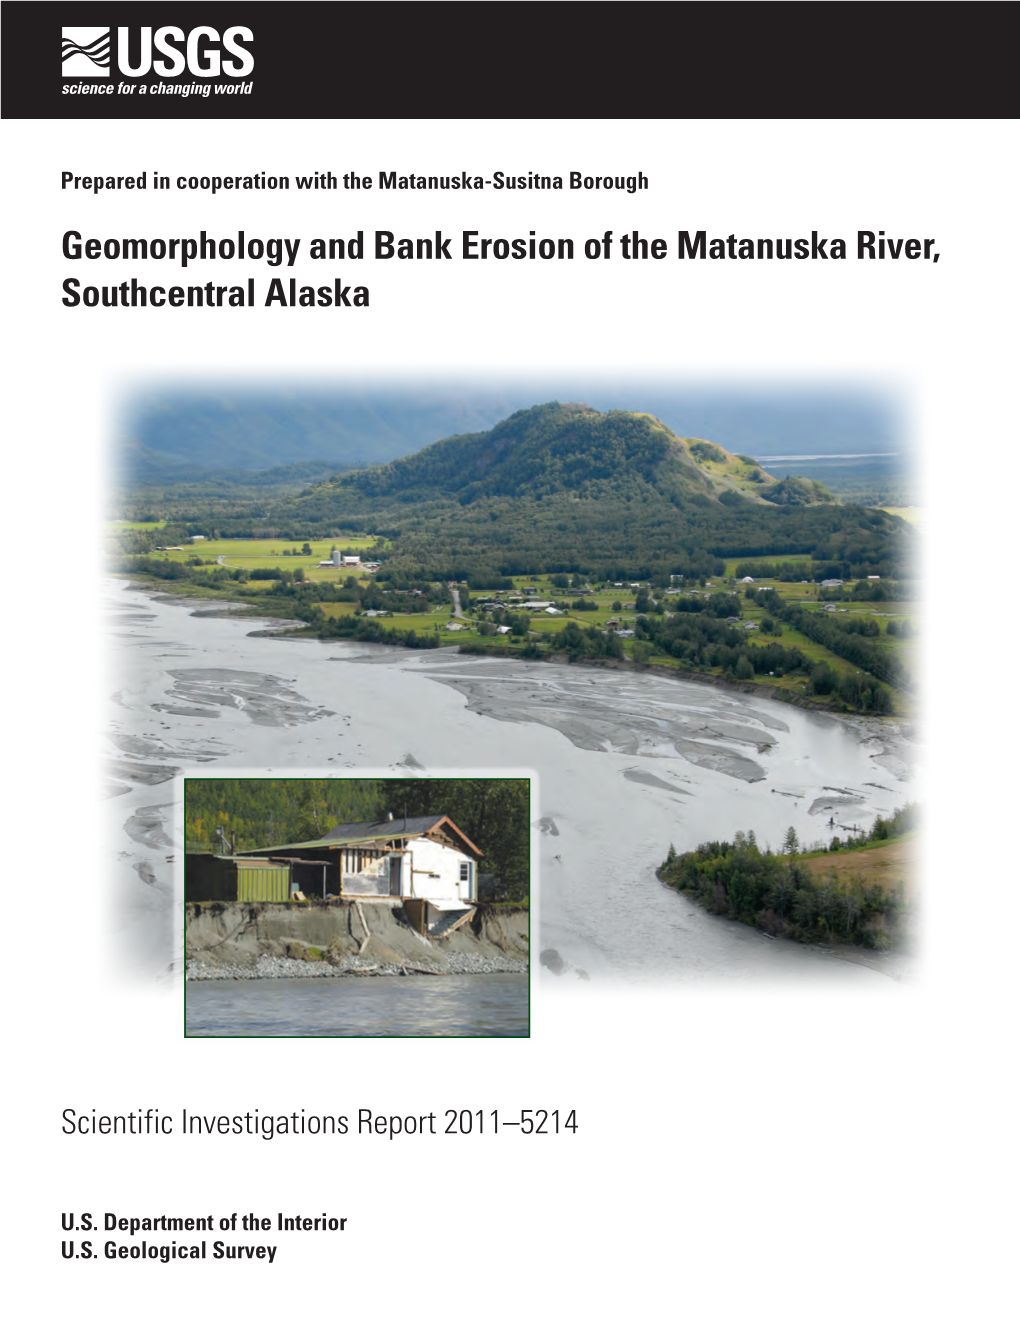 Geomorphology and Bank Erosion of the Matanuska River, Southcentral Alaska